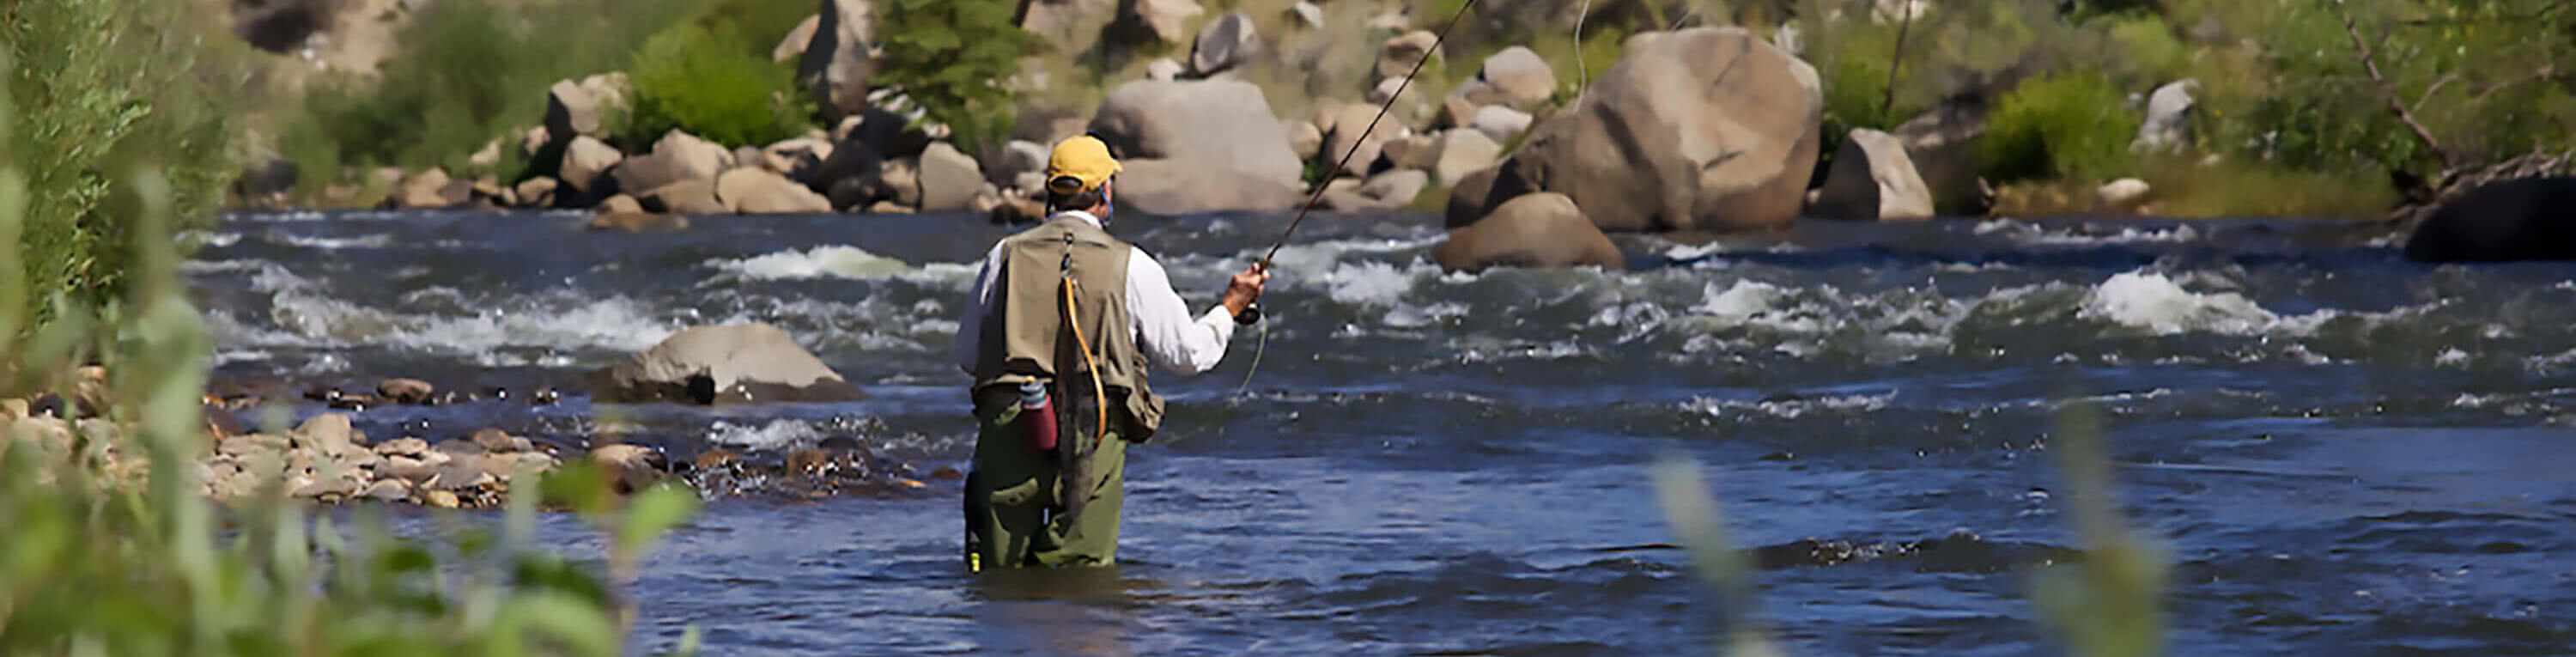 Top Fly Fishing Locations Near Vail Colorado | Fly Fishing Colorado